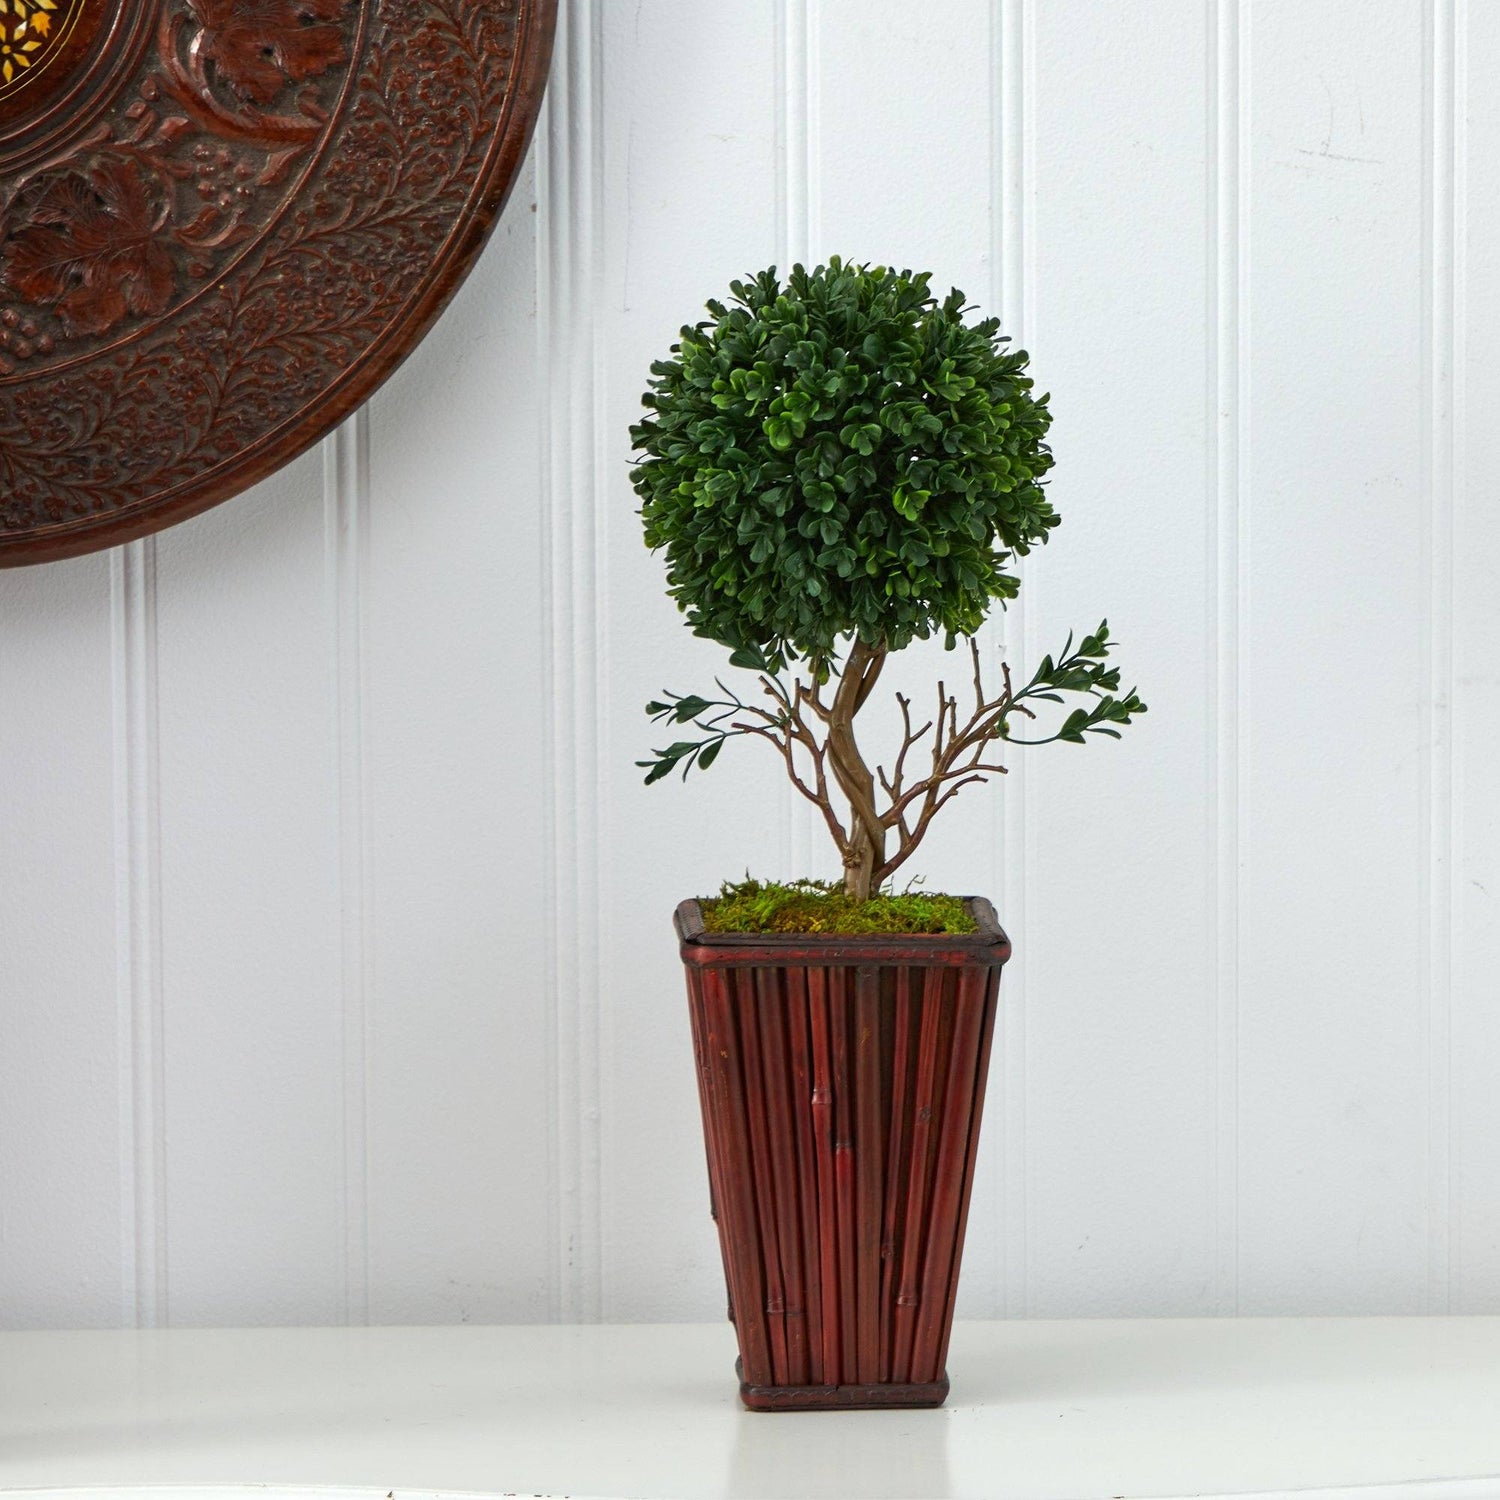 19” Boxwood Topiary Artificial Tree in Decorative Planter(Indoor/Outdoor)